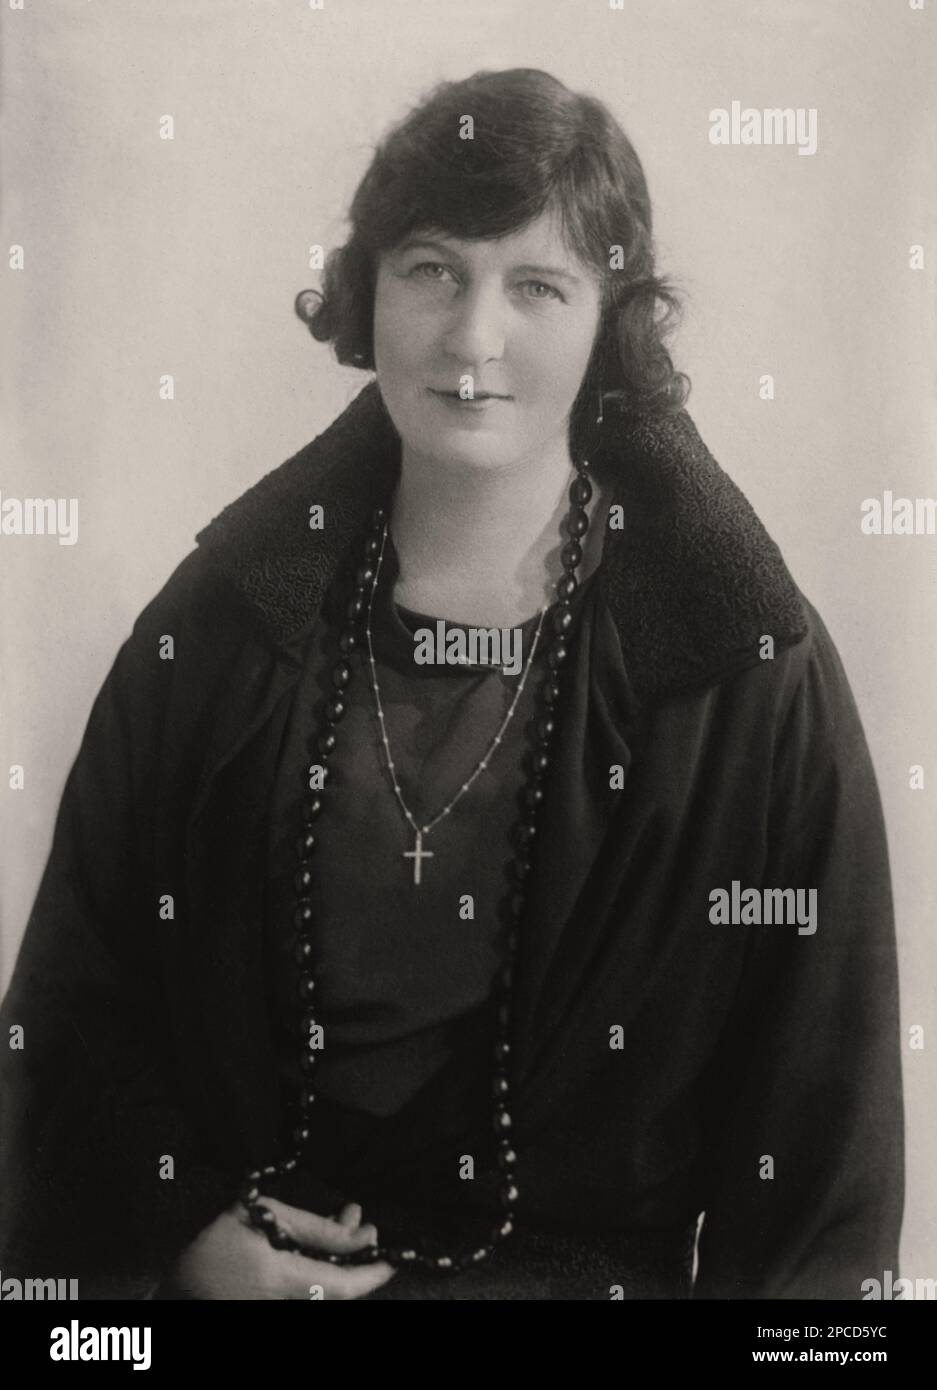 1924 , USA :  The Lady Agnes Lilian KINGSLEY WOOD , the USA born  Agnes Lilian FAWCETT ( died 1955 ),  wife of  british Sir  Howard  Kingsley Wood ; daughter of Henry Frederick Fawcett - foto storiche - foto storica   - portrait - ritratto - Nobiltà  - nobility - nobili  - nobile  - GRAND BRETAGNA  - jewellery - jewels - gioielli - gioiello - bijoux - eardrops - earrings  - cross - croce - crocifisso - crocefisso ----  Archivio GBB Stock Photo